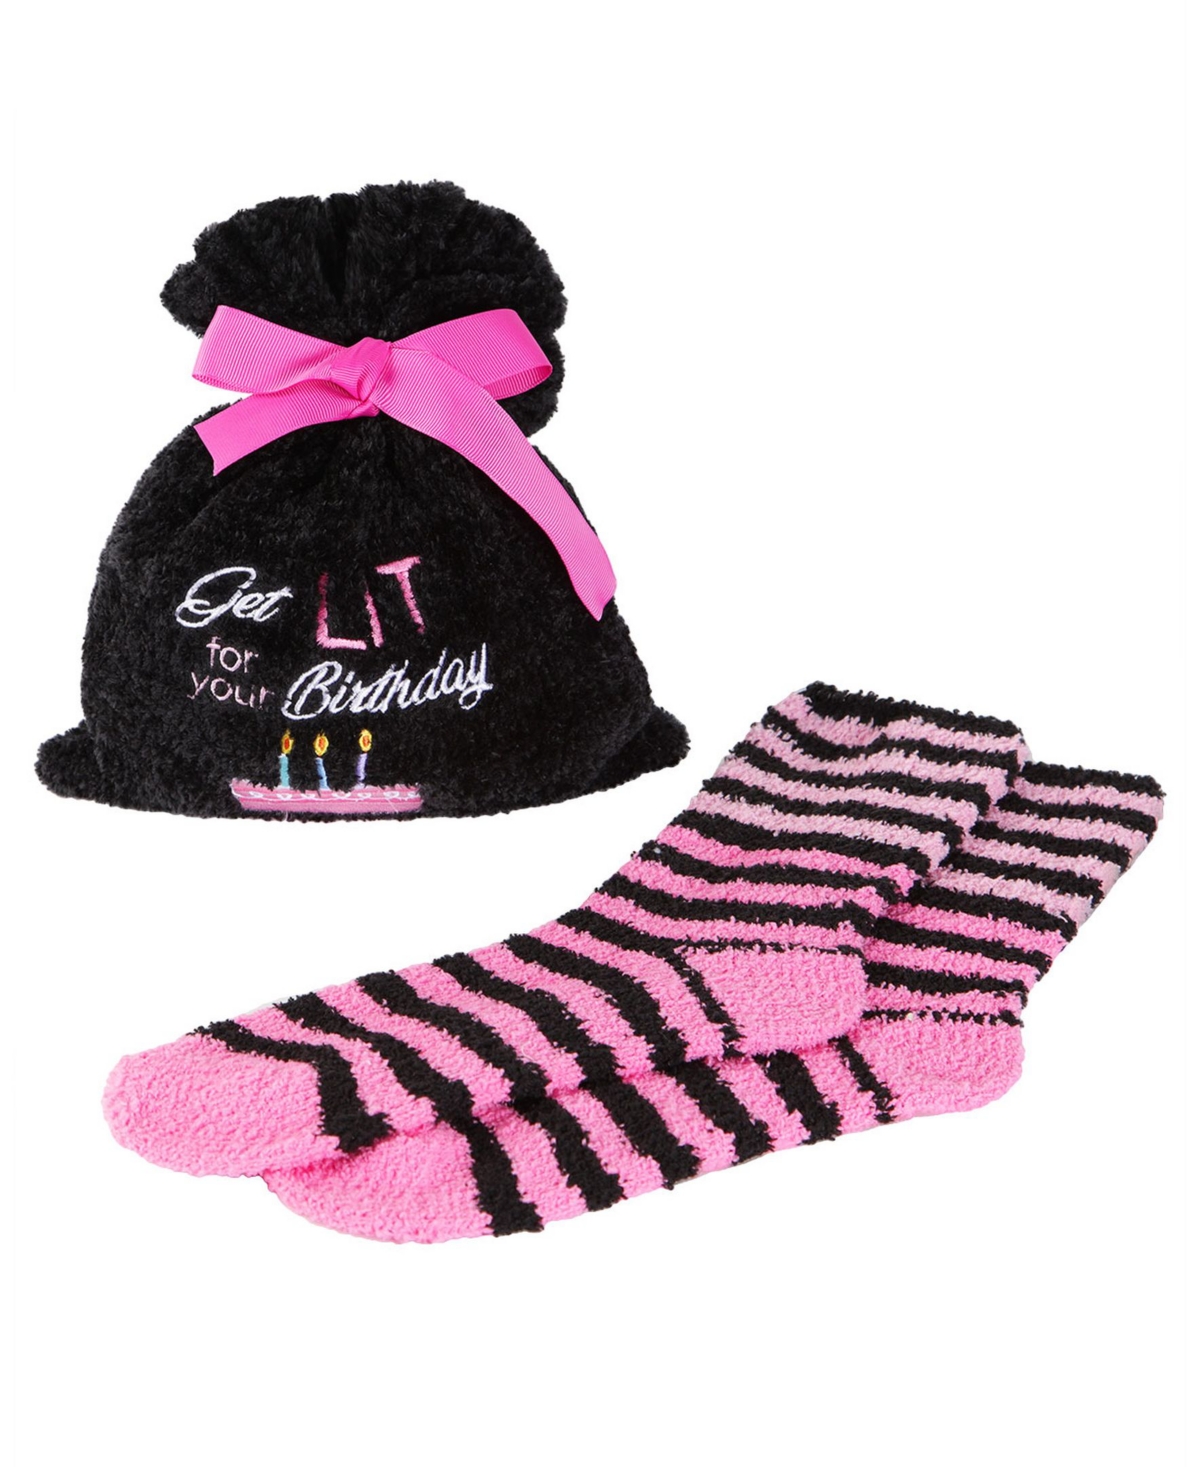 Get Lit Birthday Cozy Women's Socks with Gift Bag - Black